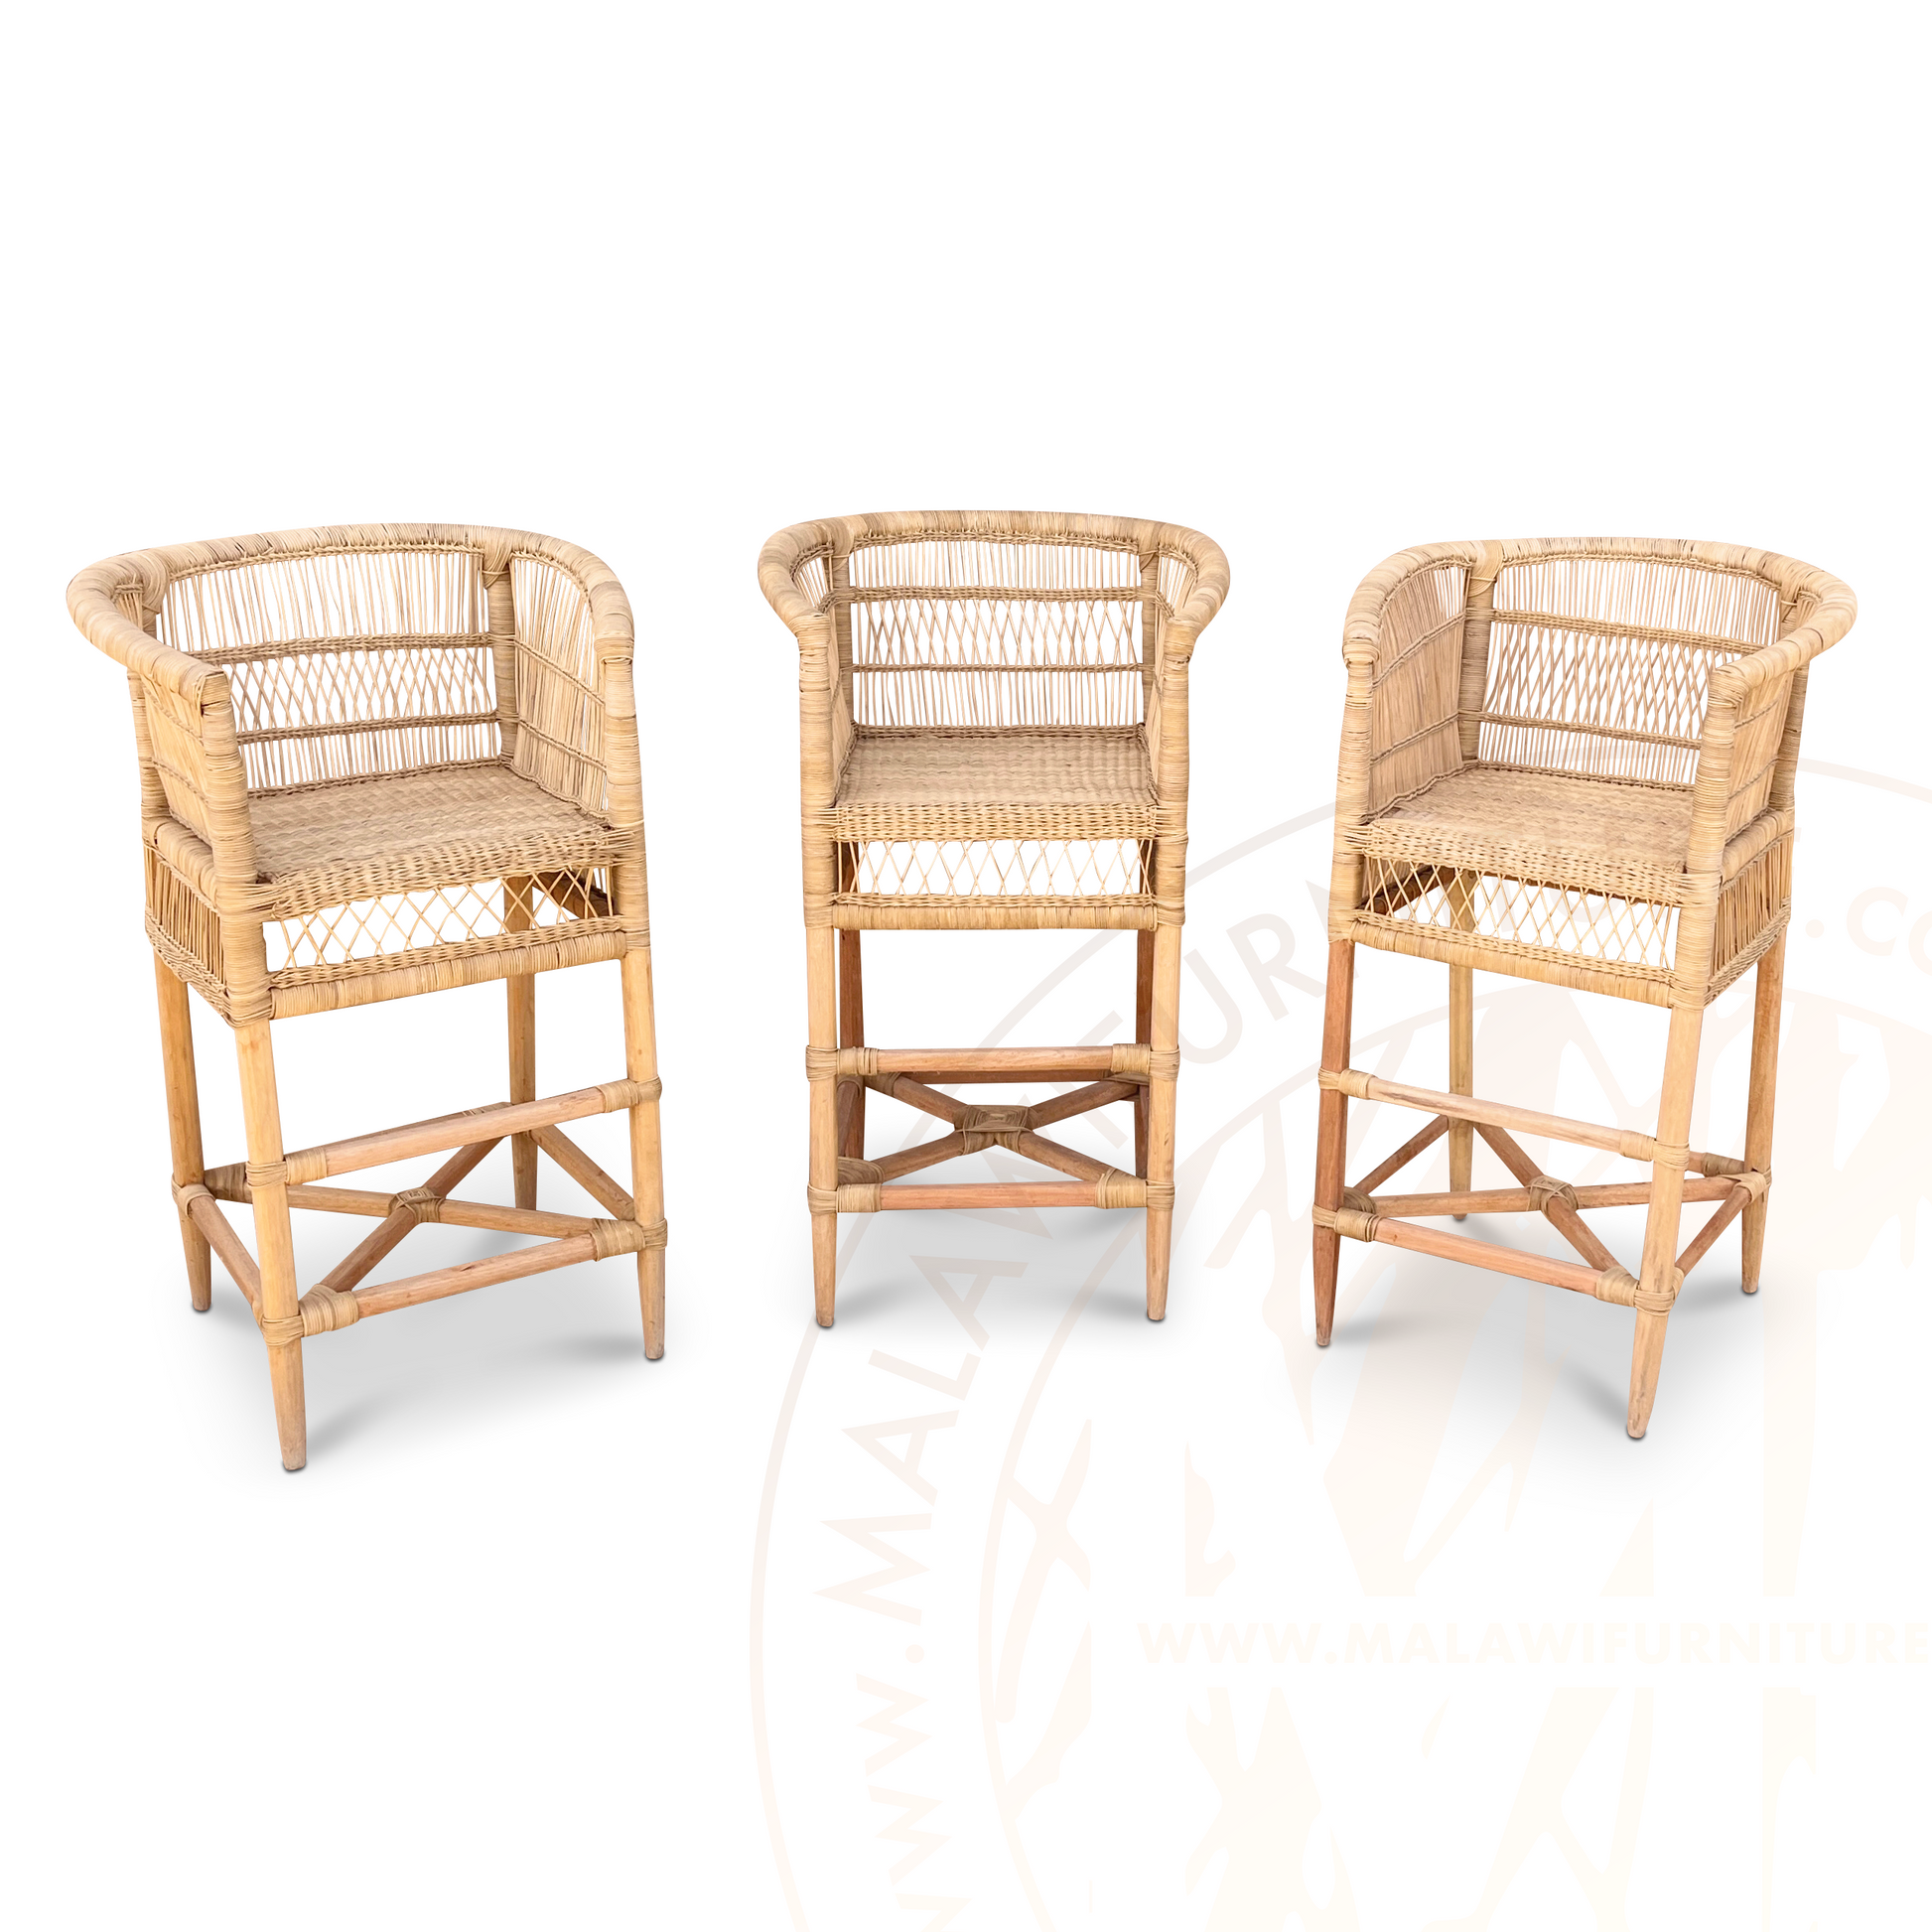 three Traditional Bar Stool Chairs